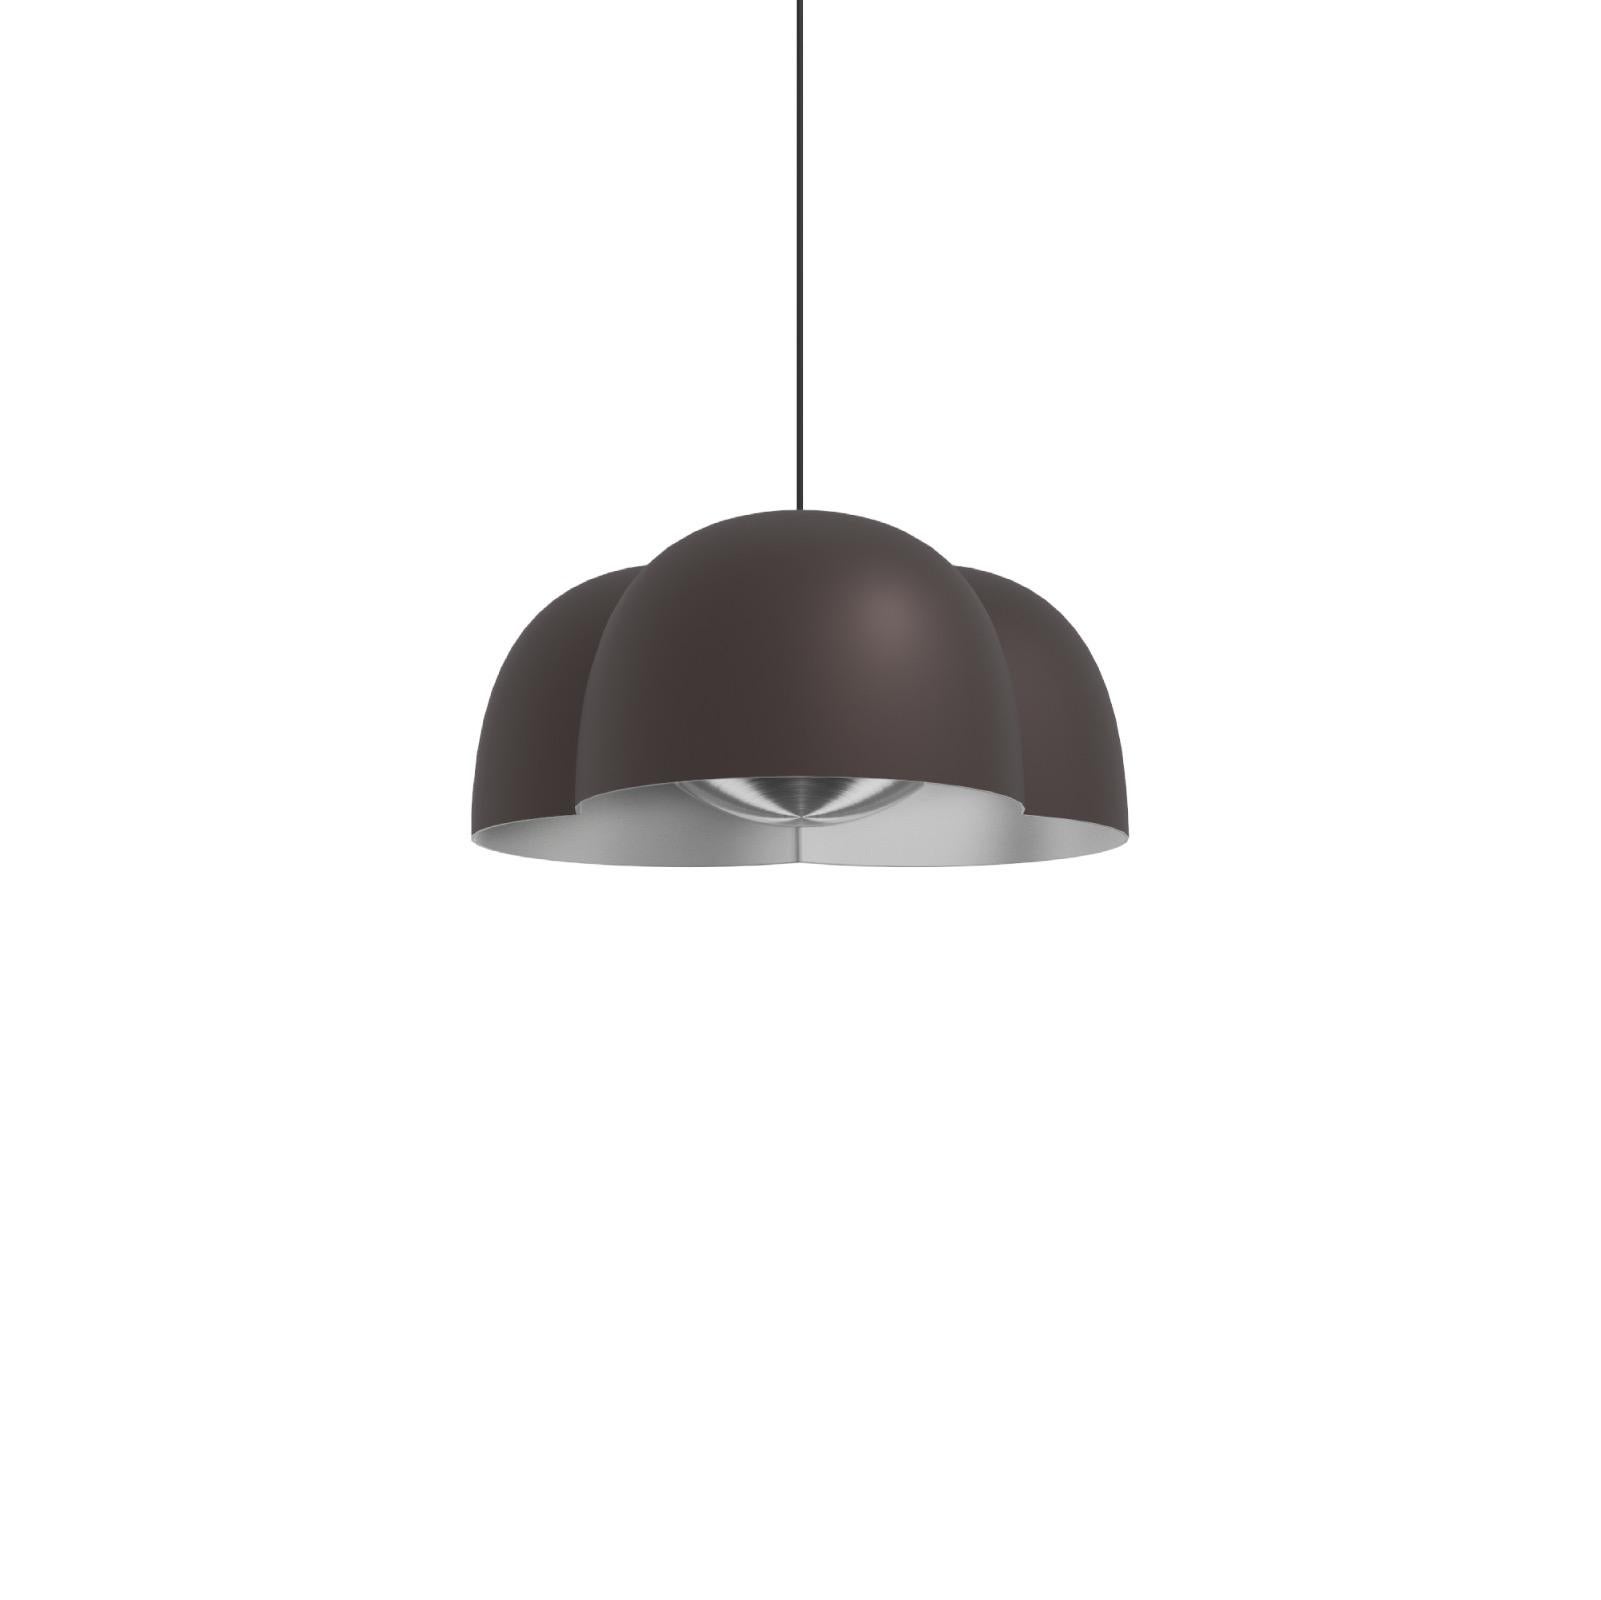 Aluminum Contemporary Pendant Lamp 'Cotton' by Sebastian Herkner x Ago, Large - Charcoal  For Sale